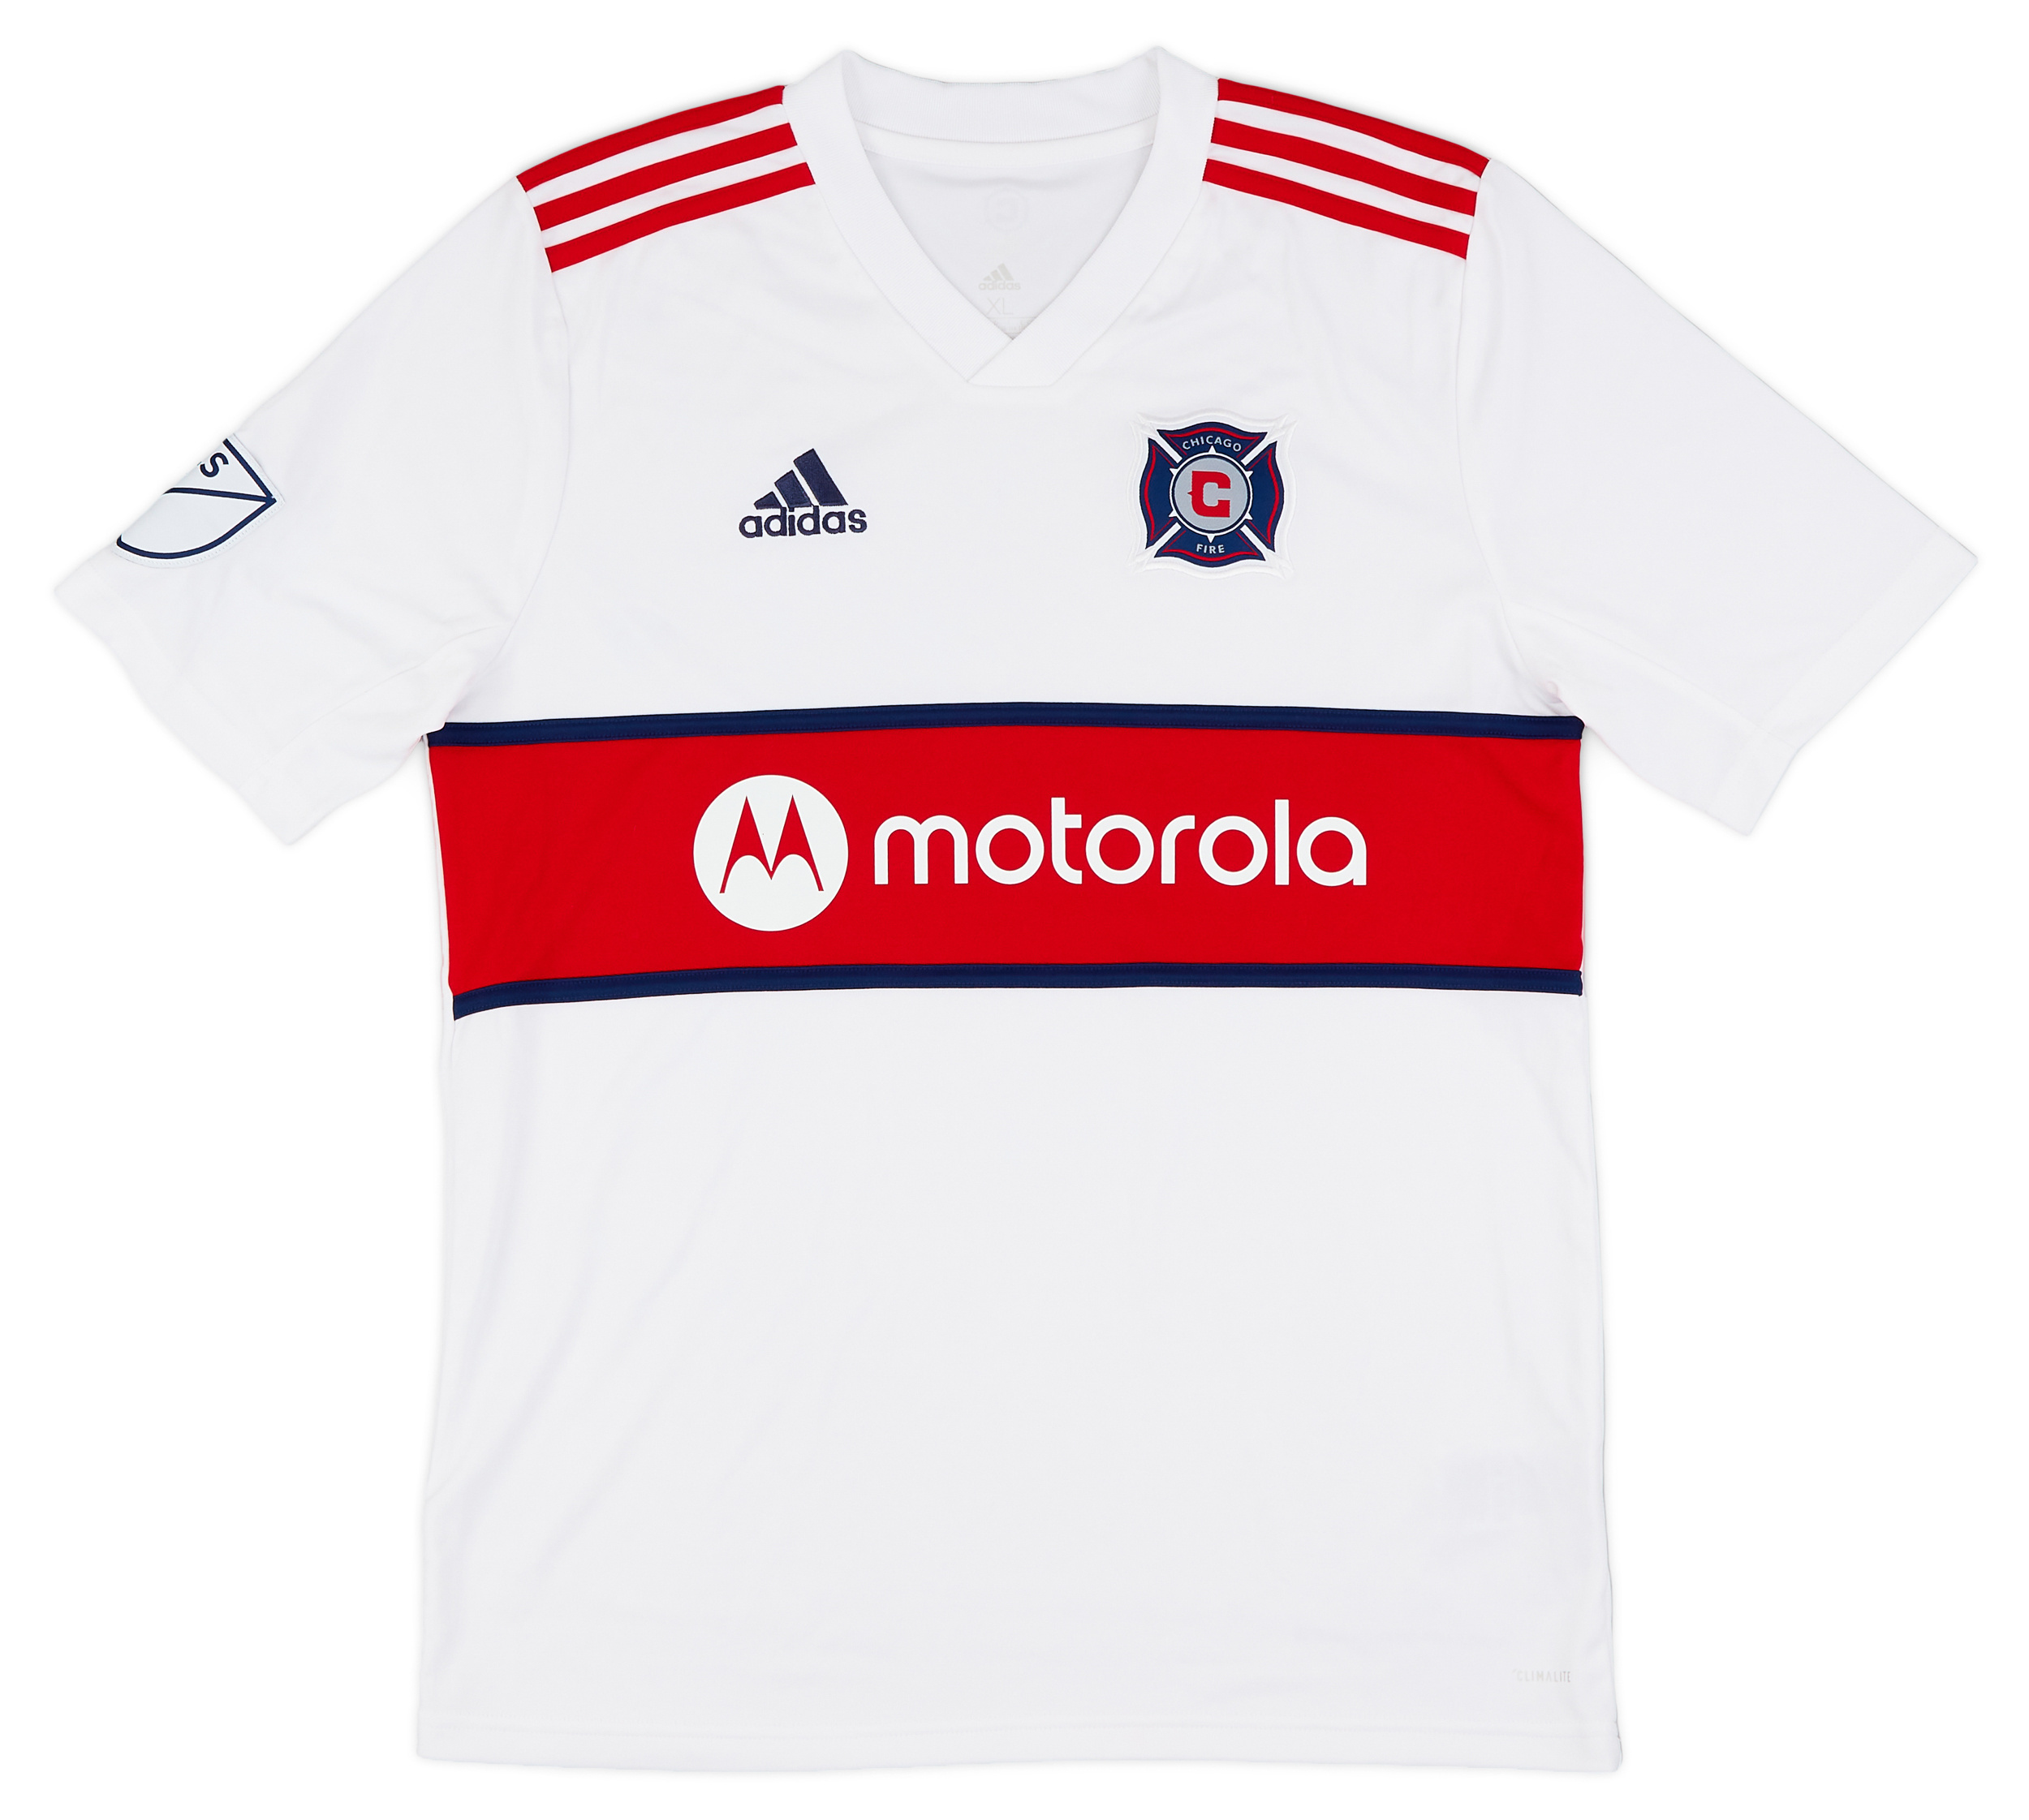 Chicago Fire Special football shirt 2021. Sponsored by Motorola